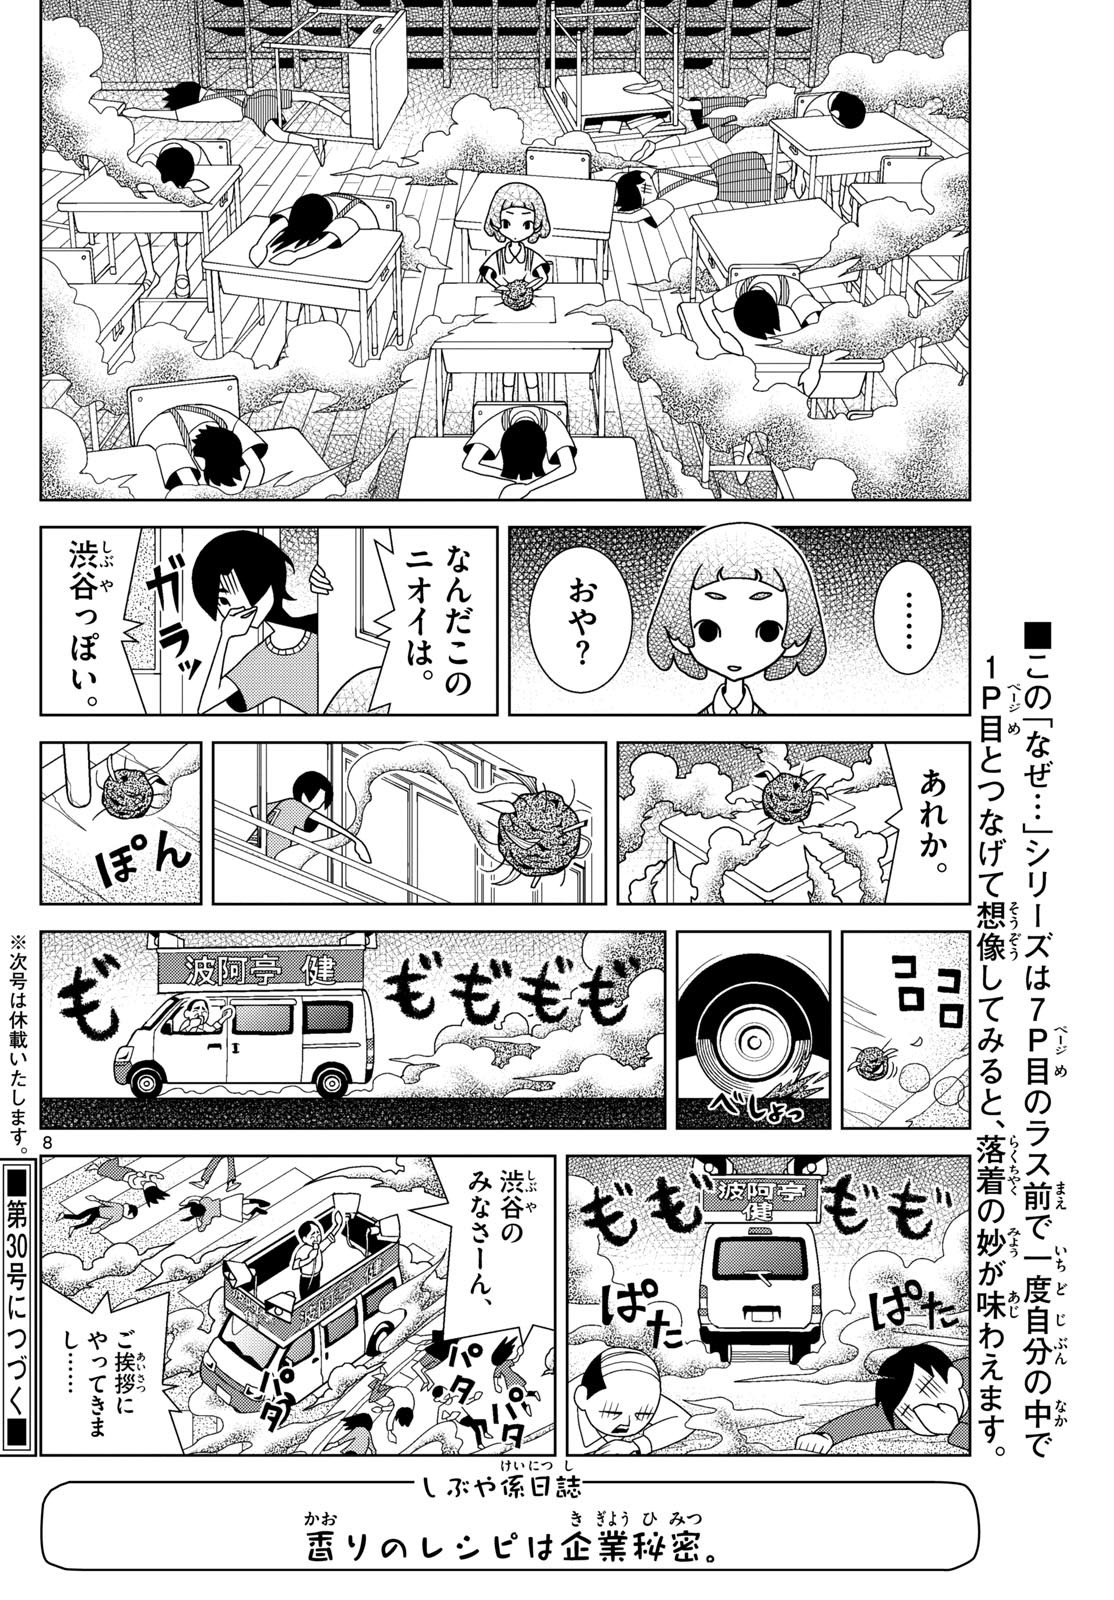 Shibuya Near Family - Chapter 097 - Page 8